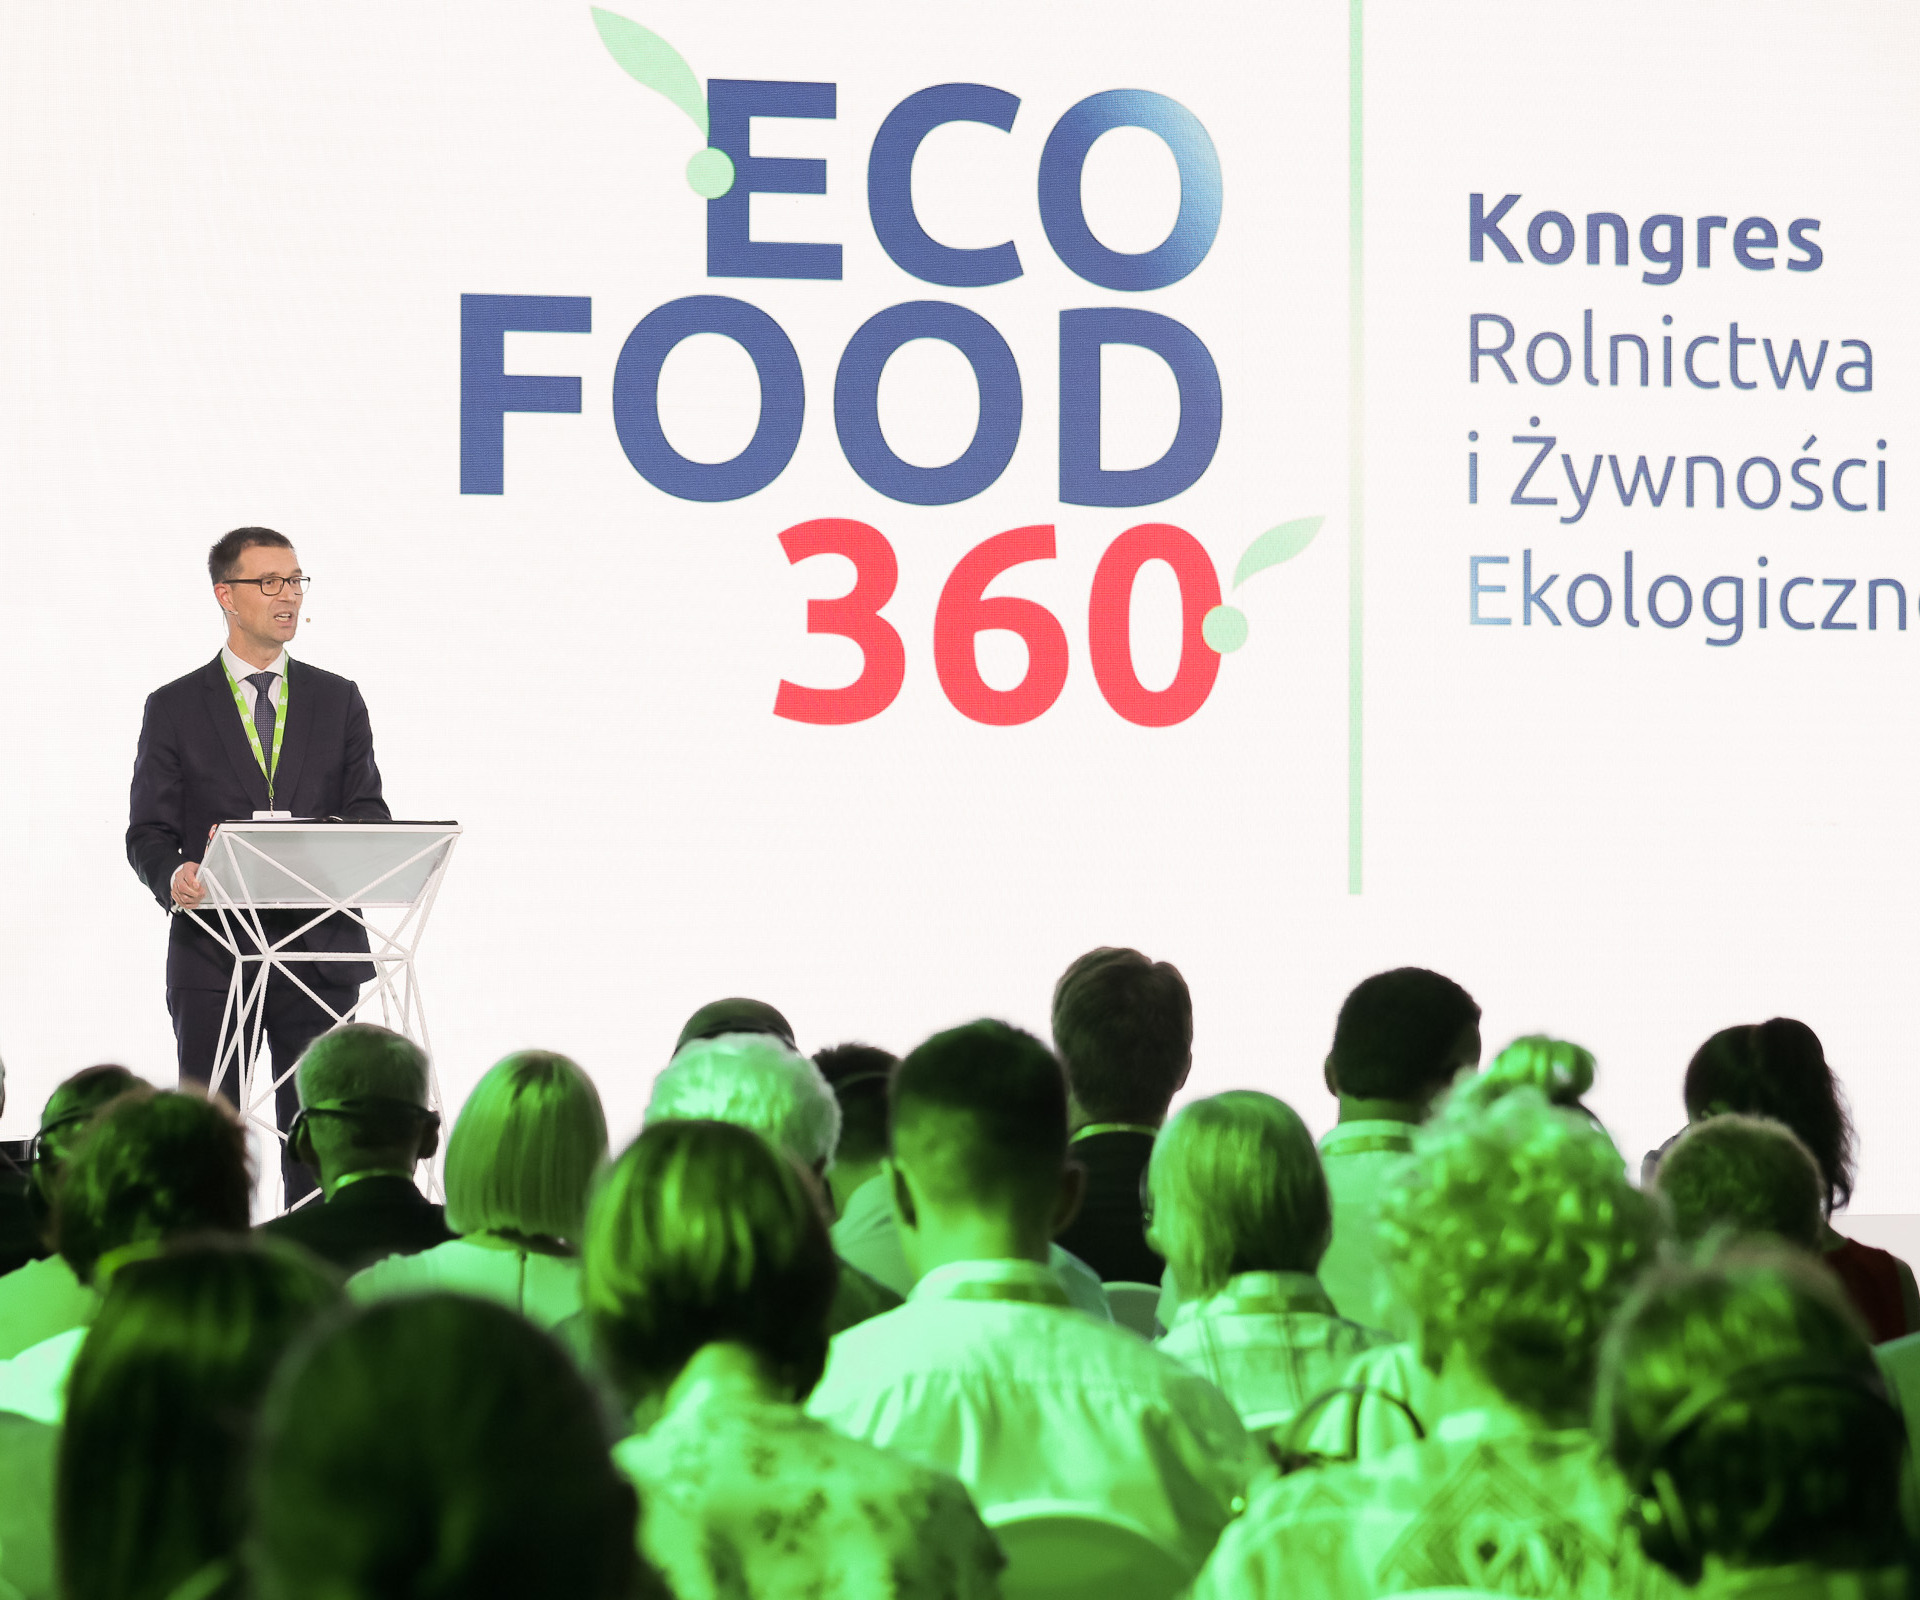 ECO FOOD 360 Congress